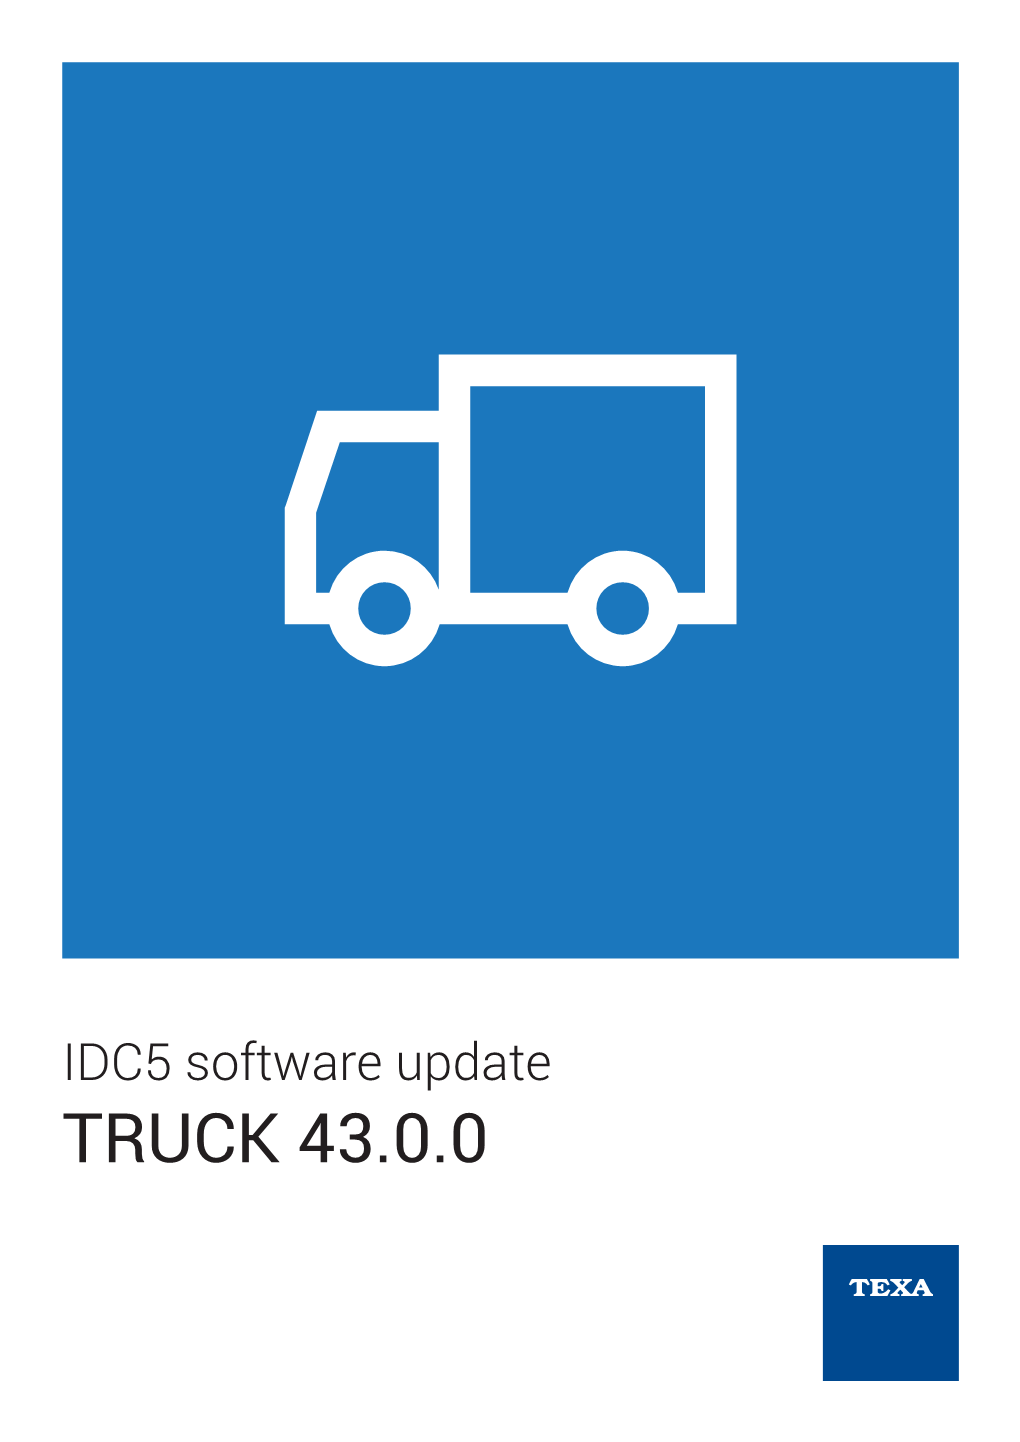 TRUCK 43.0.0 IDC5 TRUCK Software Update 43.0.0